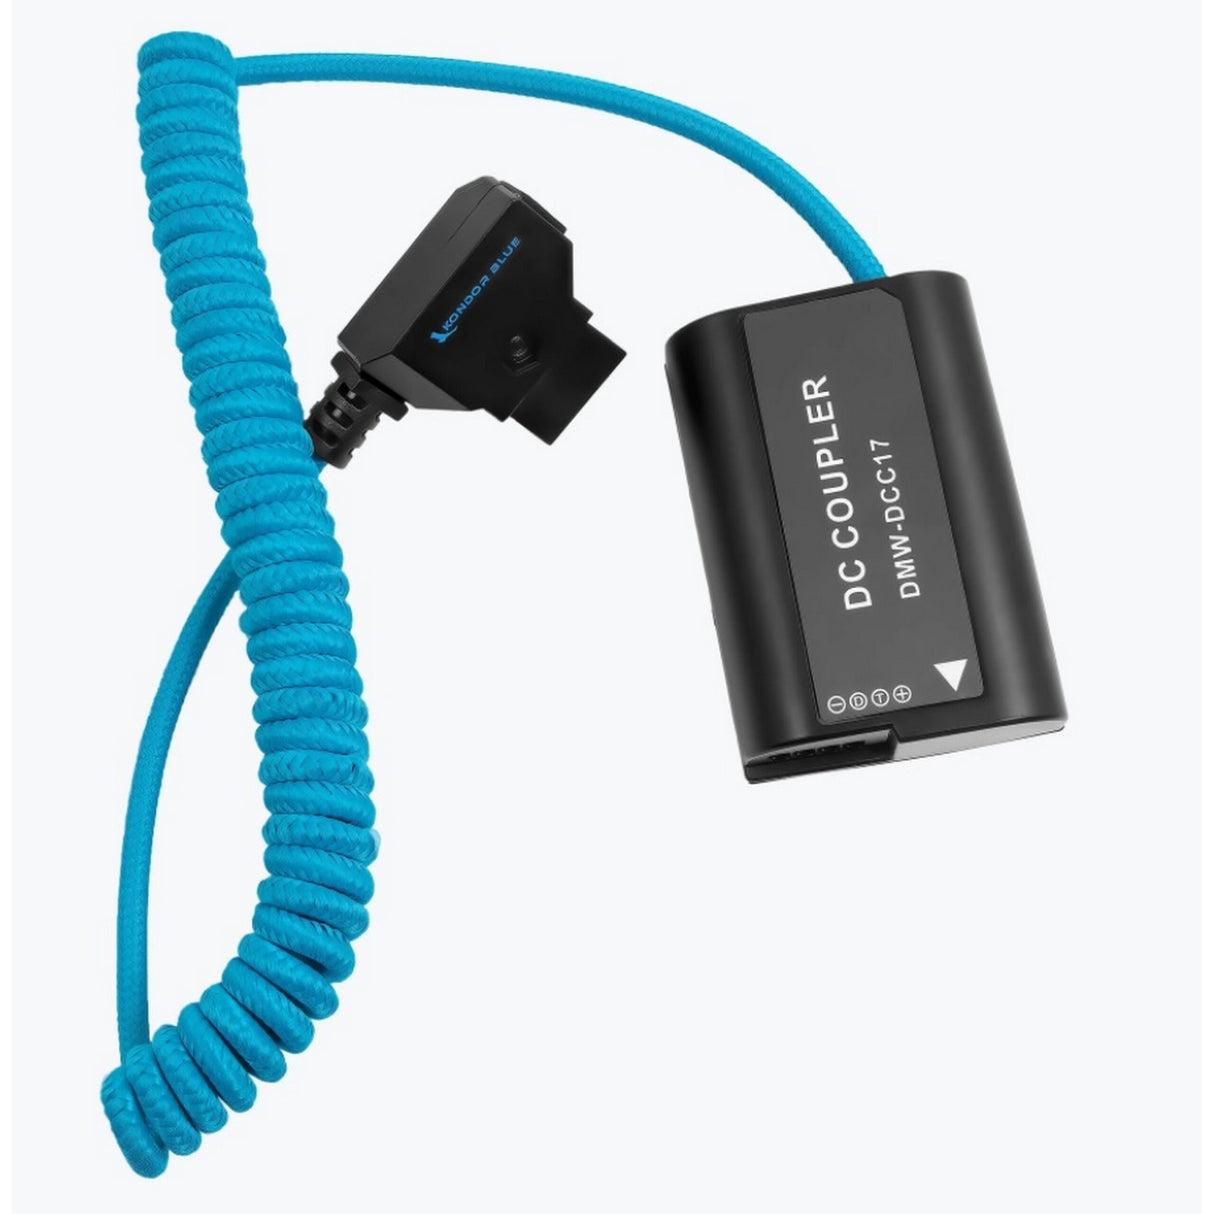 Kondor Blue D-Tap to Lumix S5 GH5 DMW-BLK22 Dummy Battery Cable